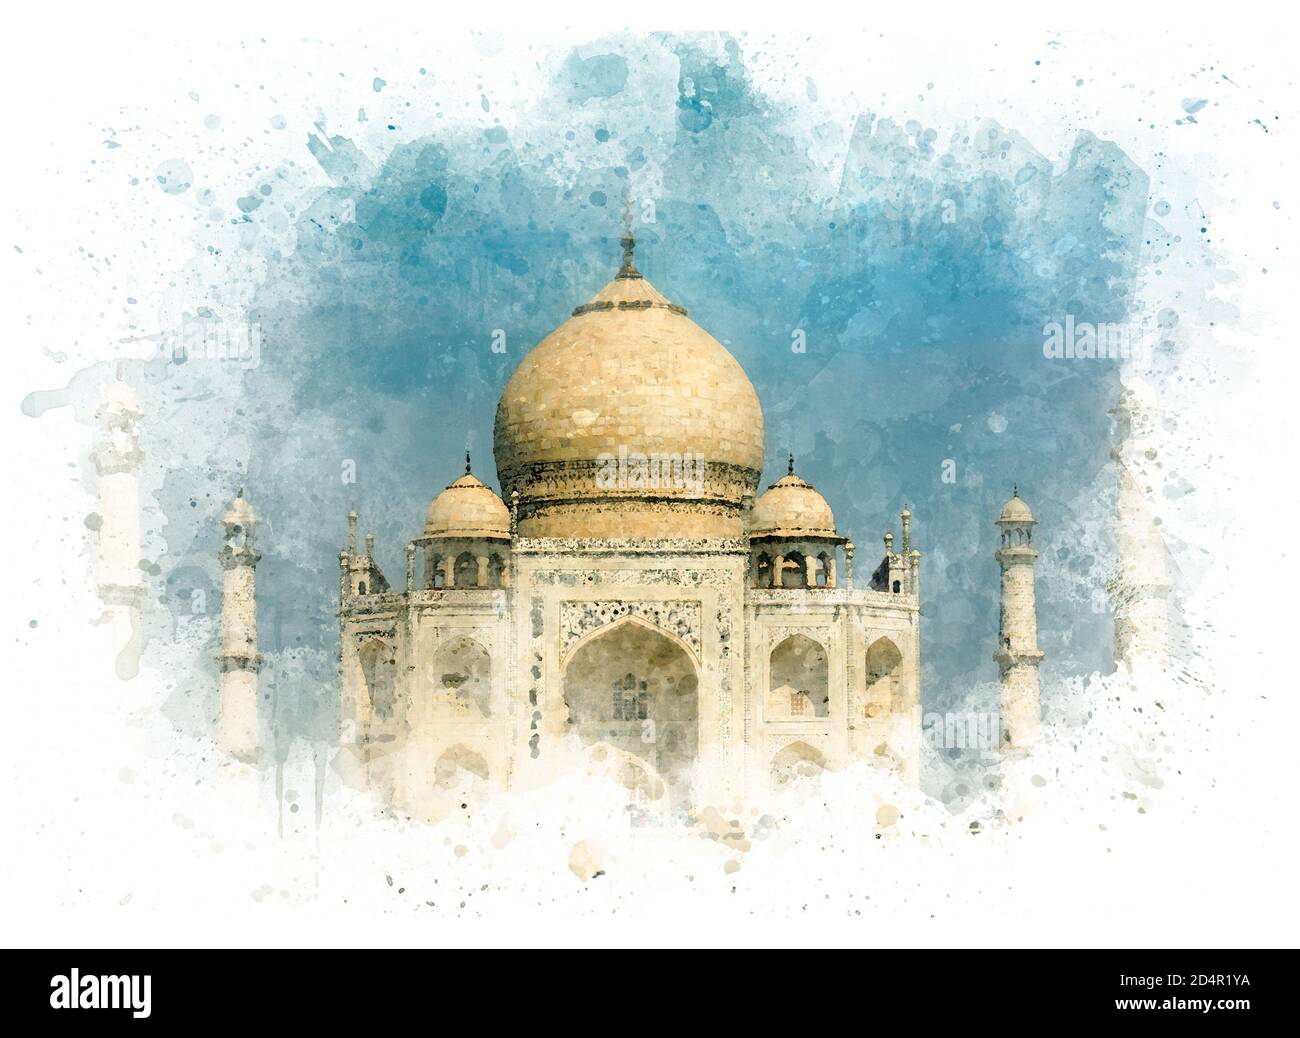 Reise-Aufkleber Von Indien Tuk-tuk, Taj Mahal, Qutab Minar, Rotes Fort  Vektor Abbildung - Illustration von auslegung, automobil: 107835572